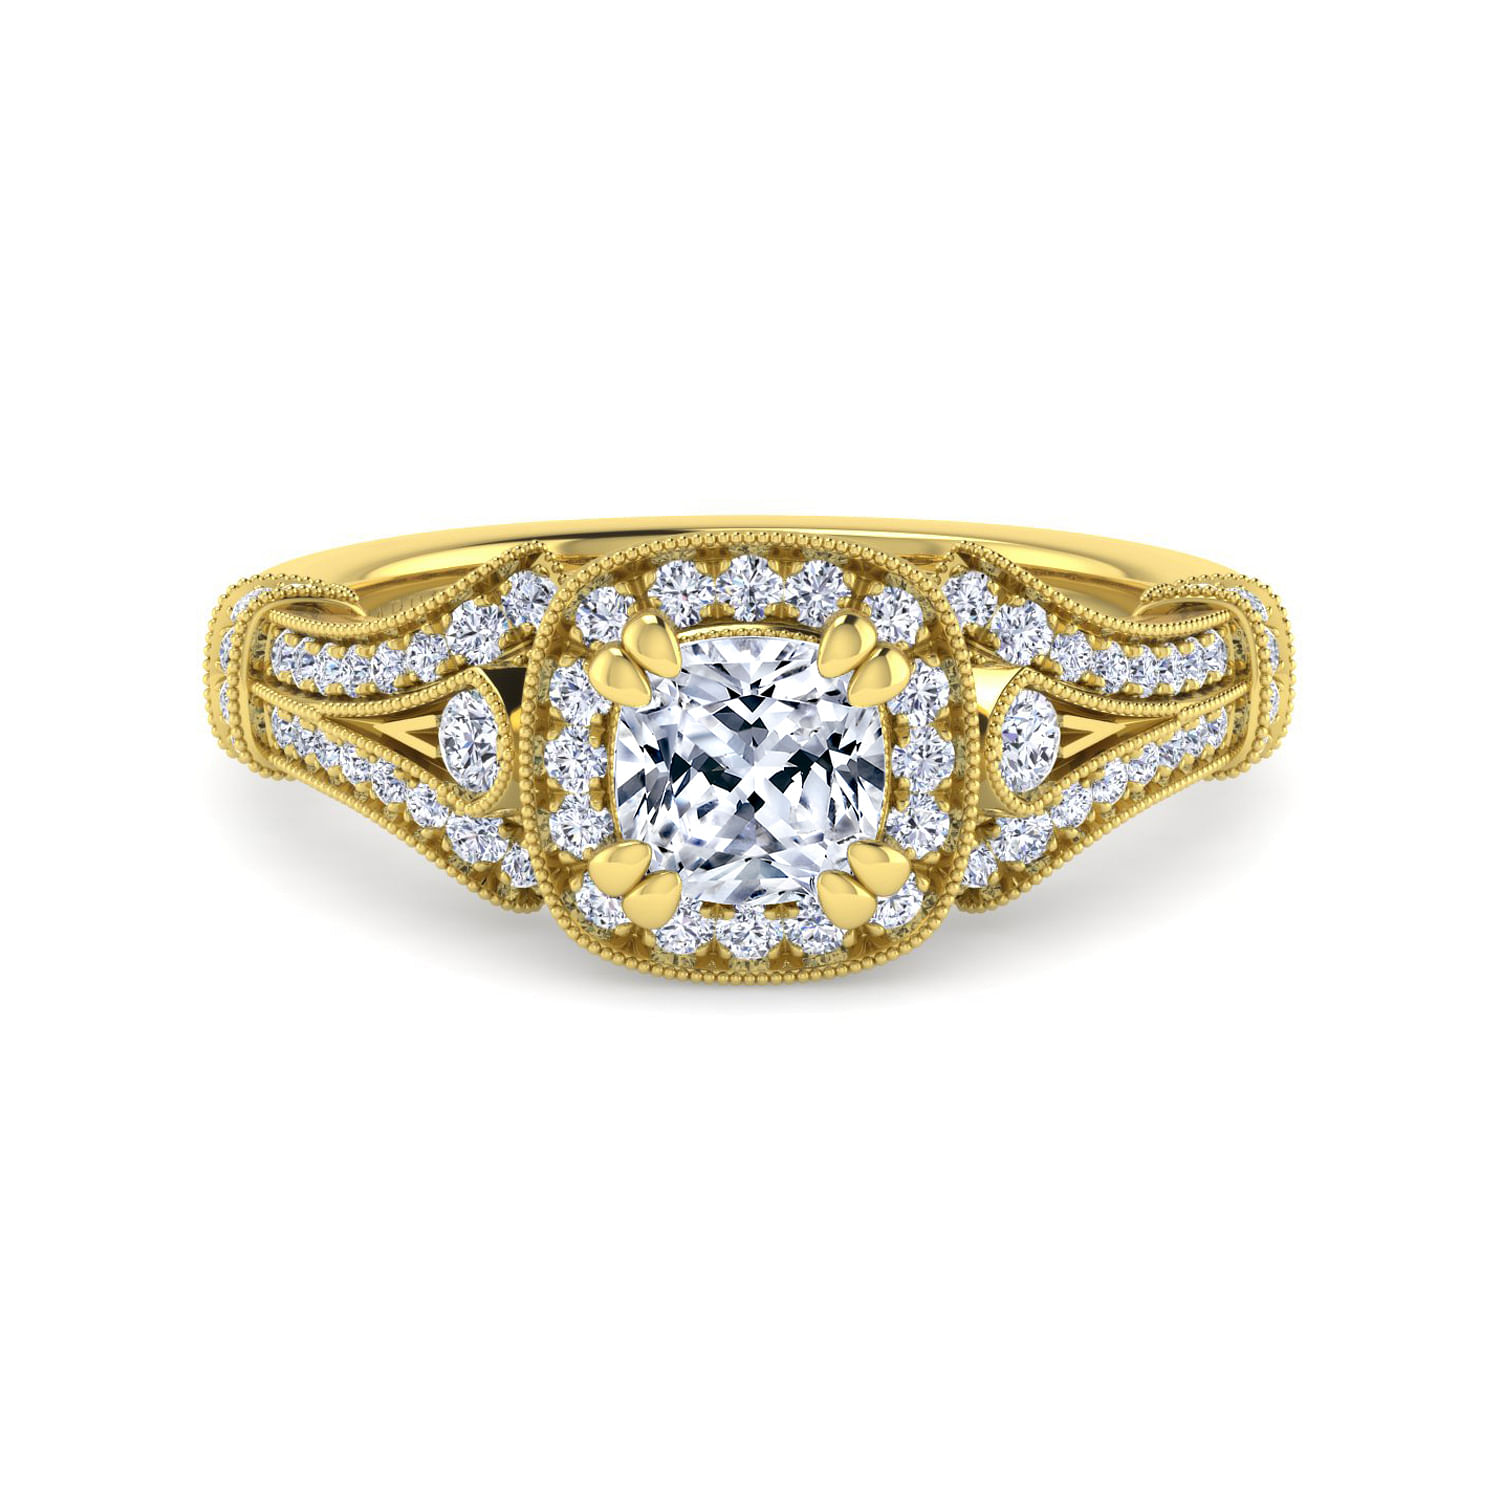 Delilah - Vintage Inspired 14K Yellow Gold Cushion Halo Diamond Engagement Ring